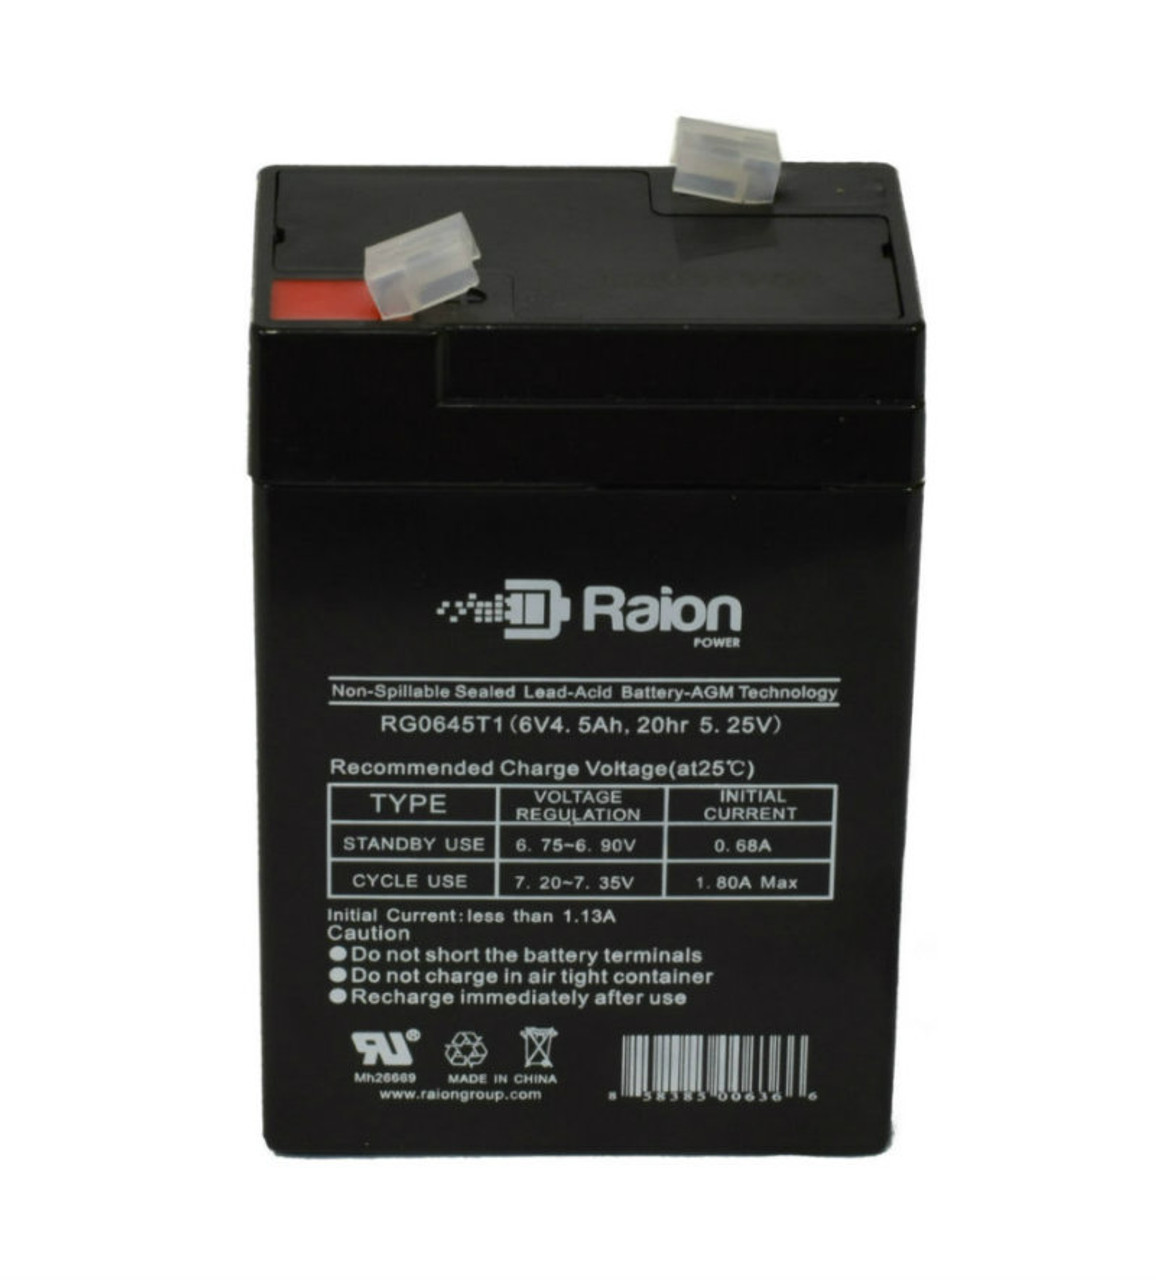 Raion Power RG0645T1 Replacement Battery Cartridge for KSTAR 3-FM-4